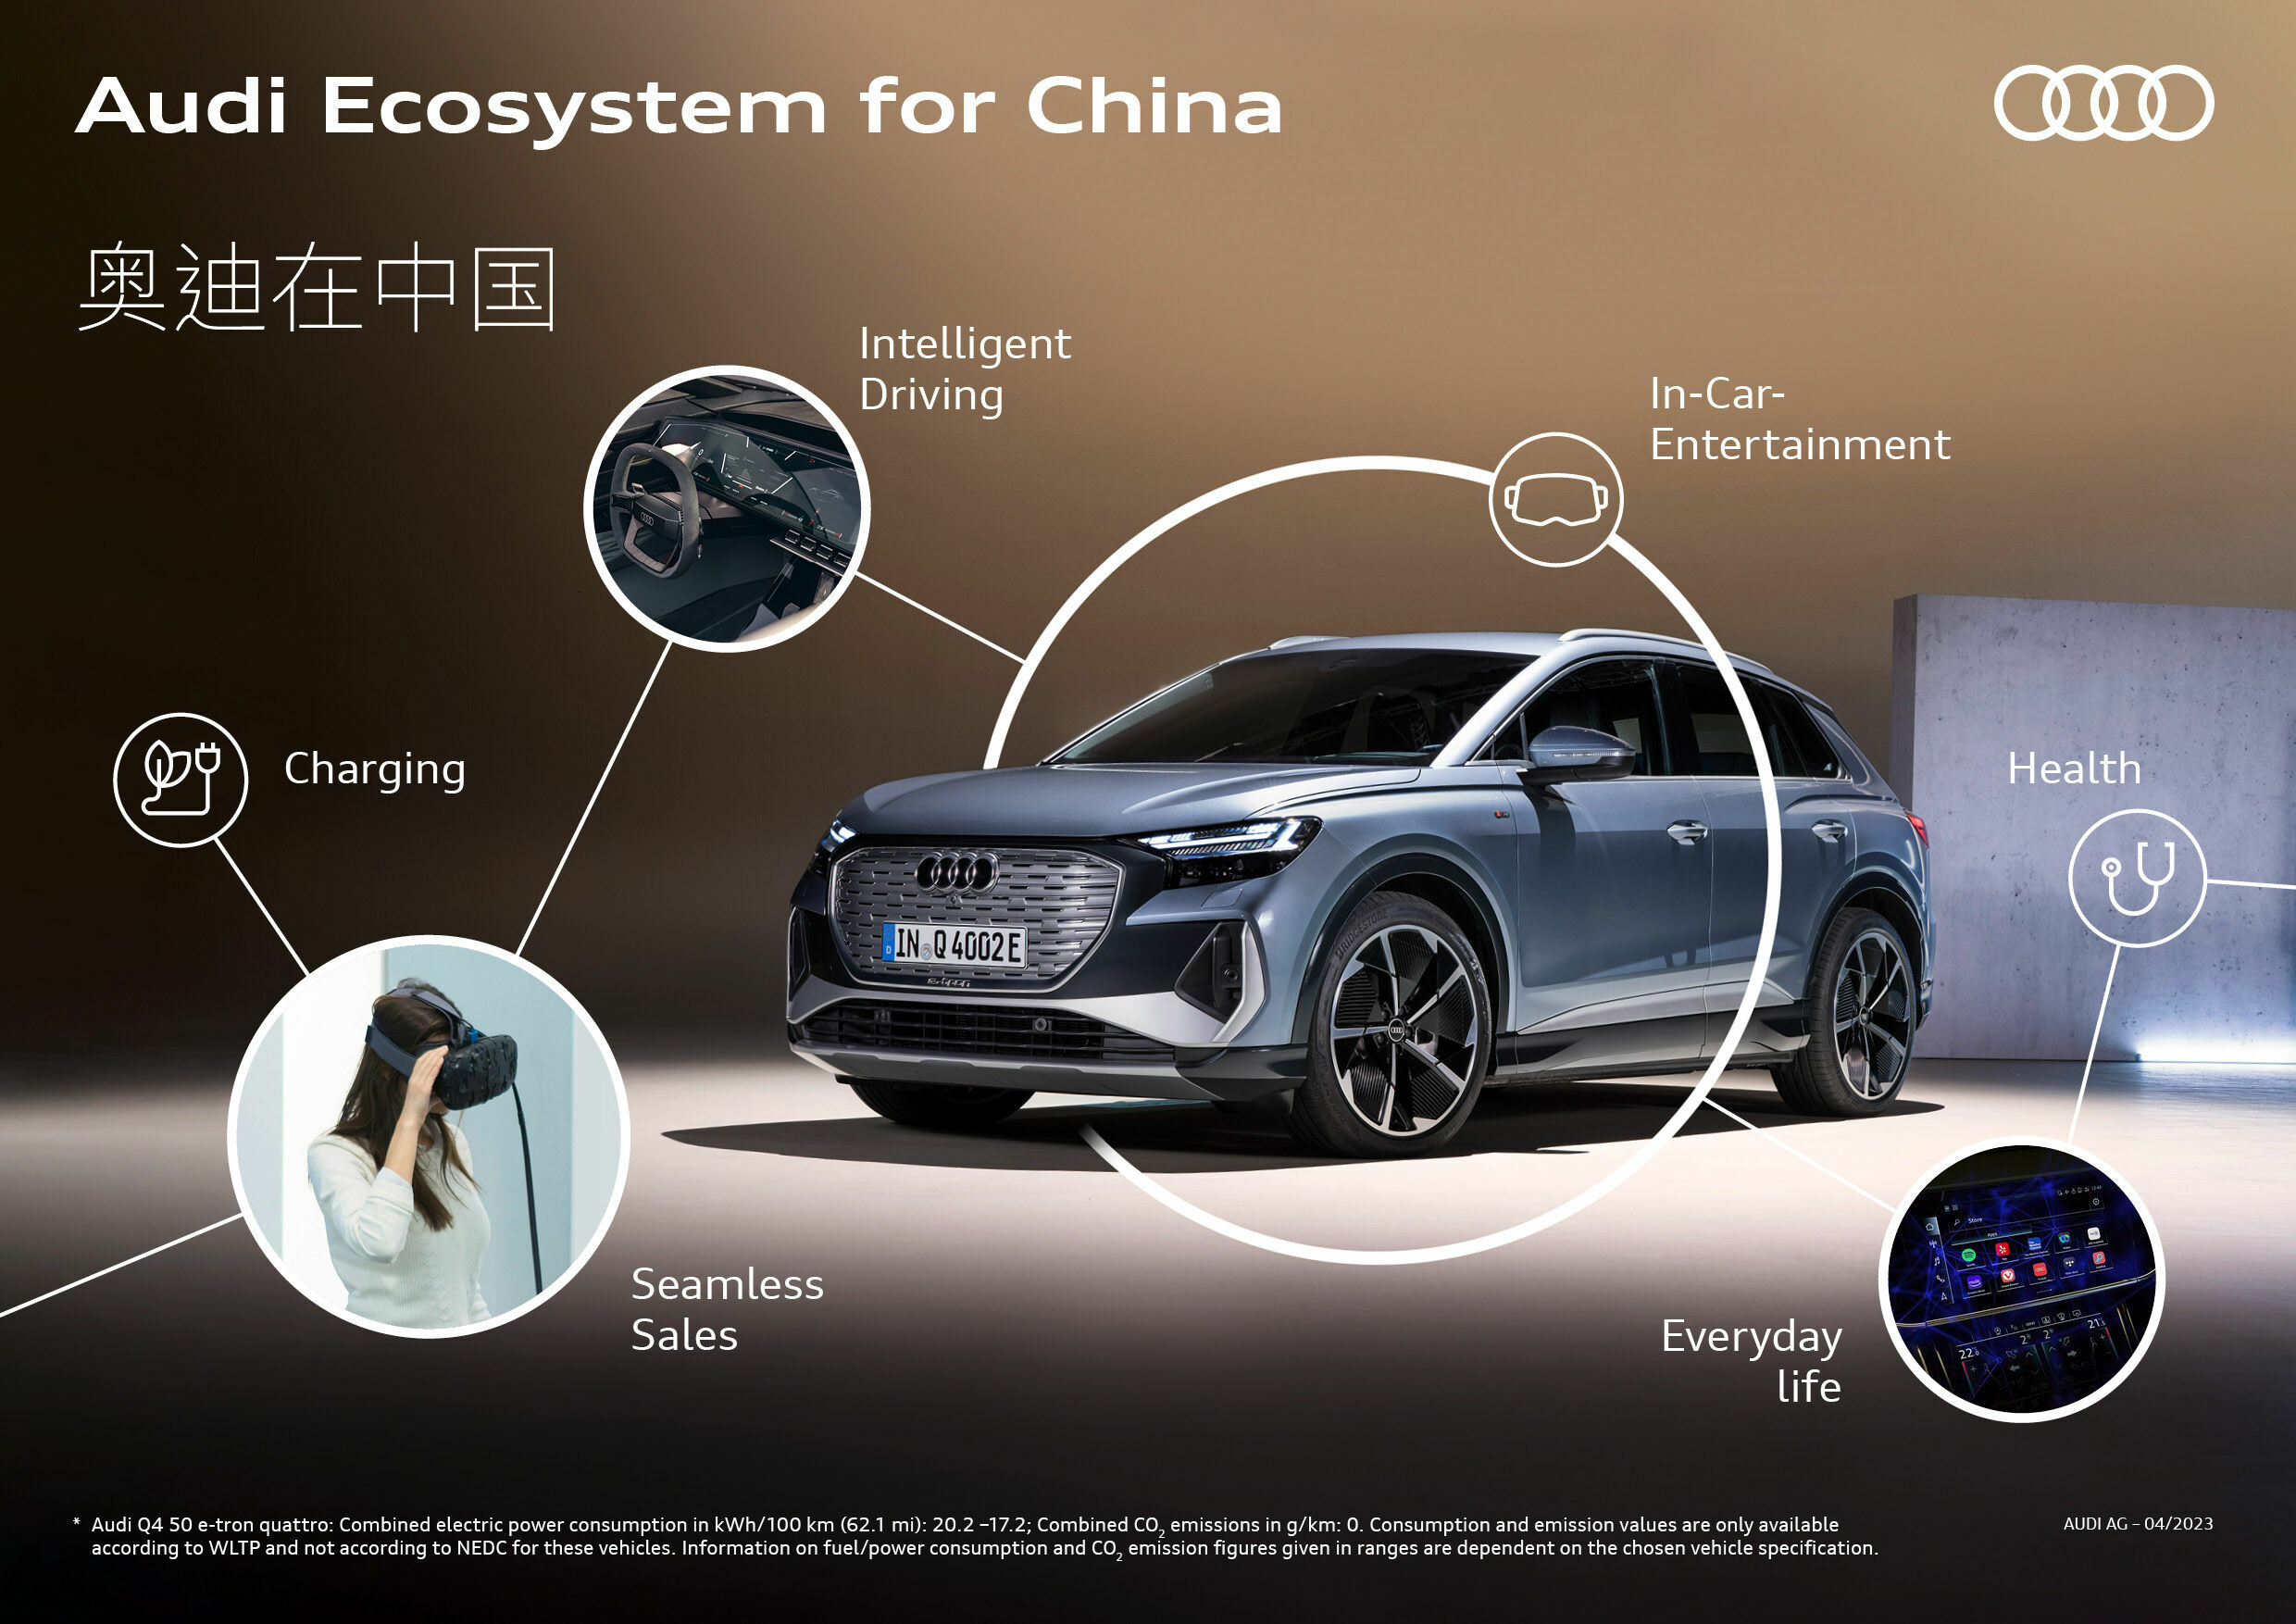 Audi Ecosystem for China